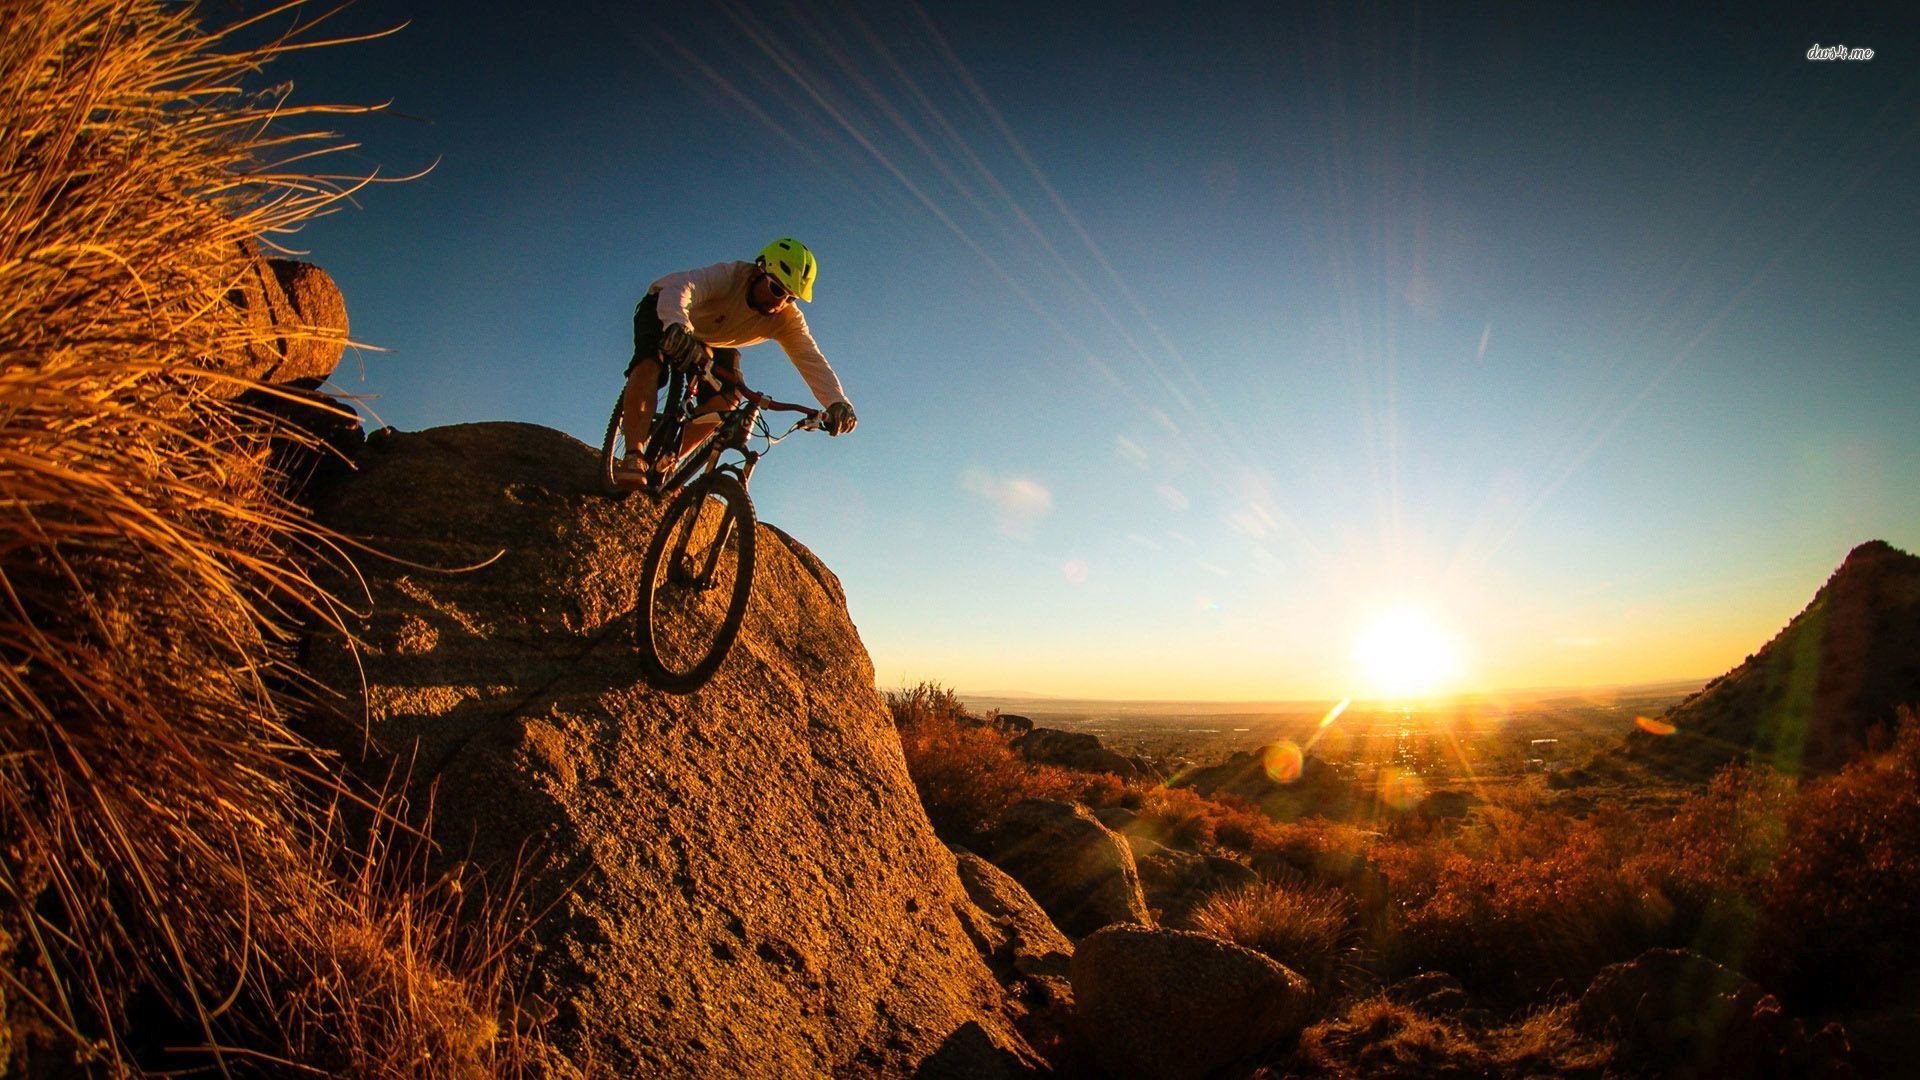 1920x1080 mountain-bike-racing-jump-style-wallpaper | Mountain biking | Pinterest